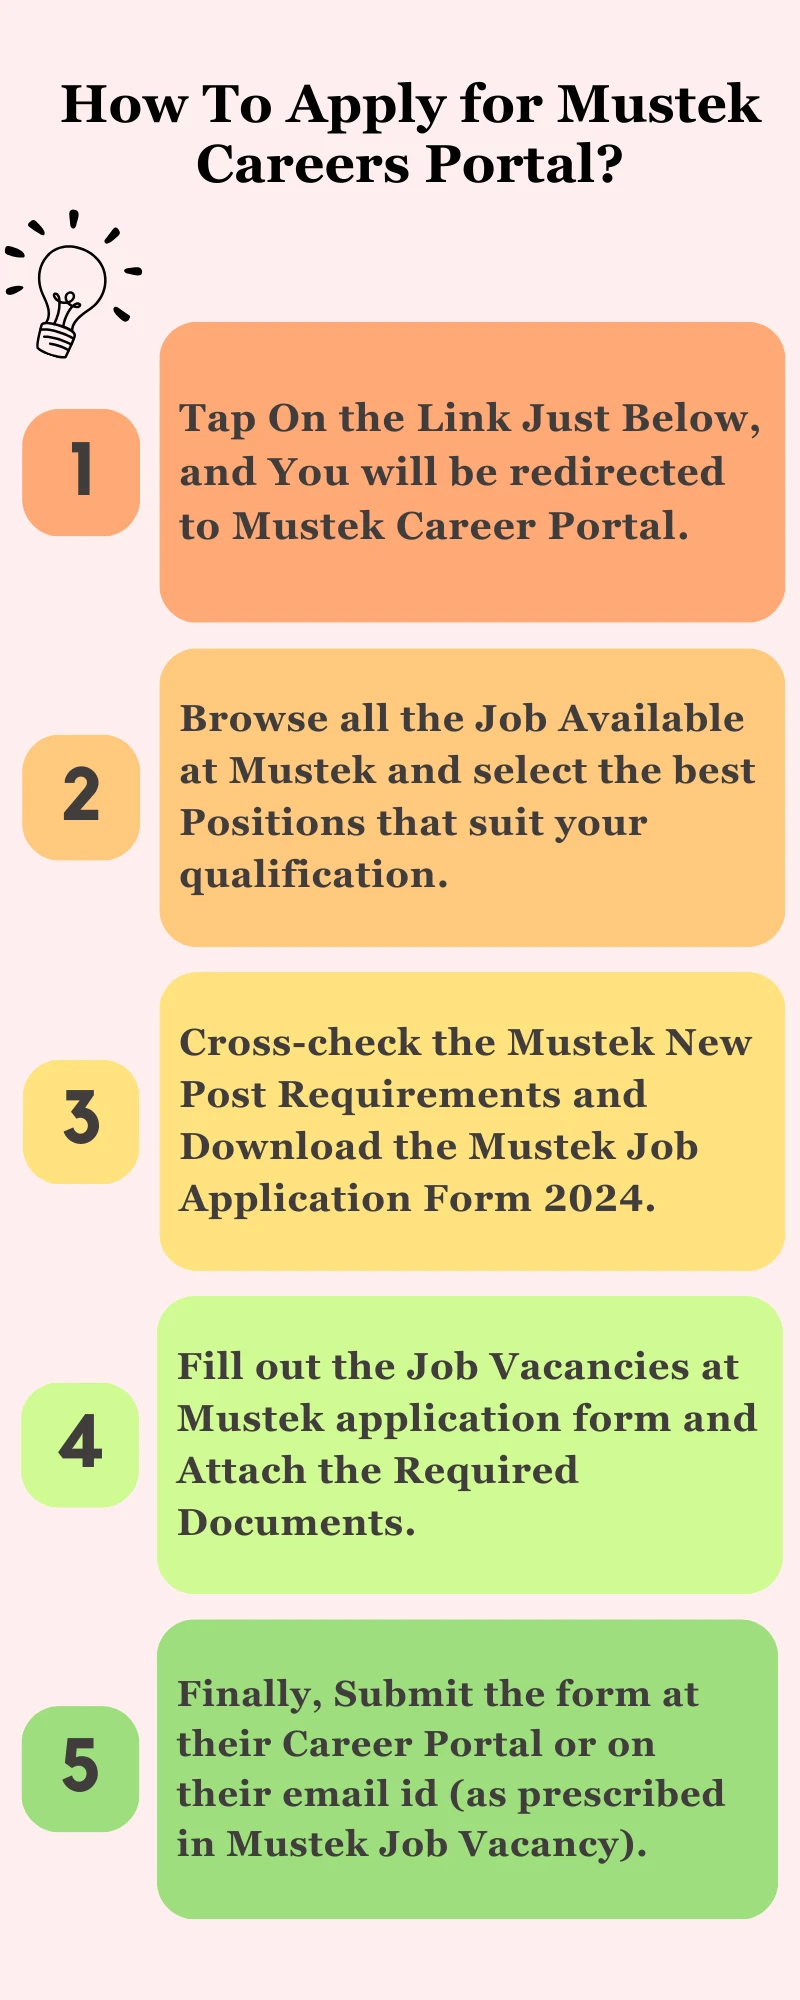 How To Apply for Mustek Careers Portal?